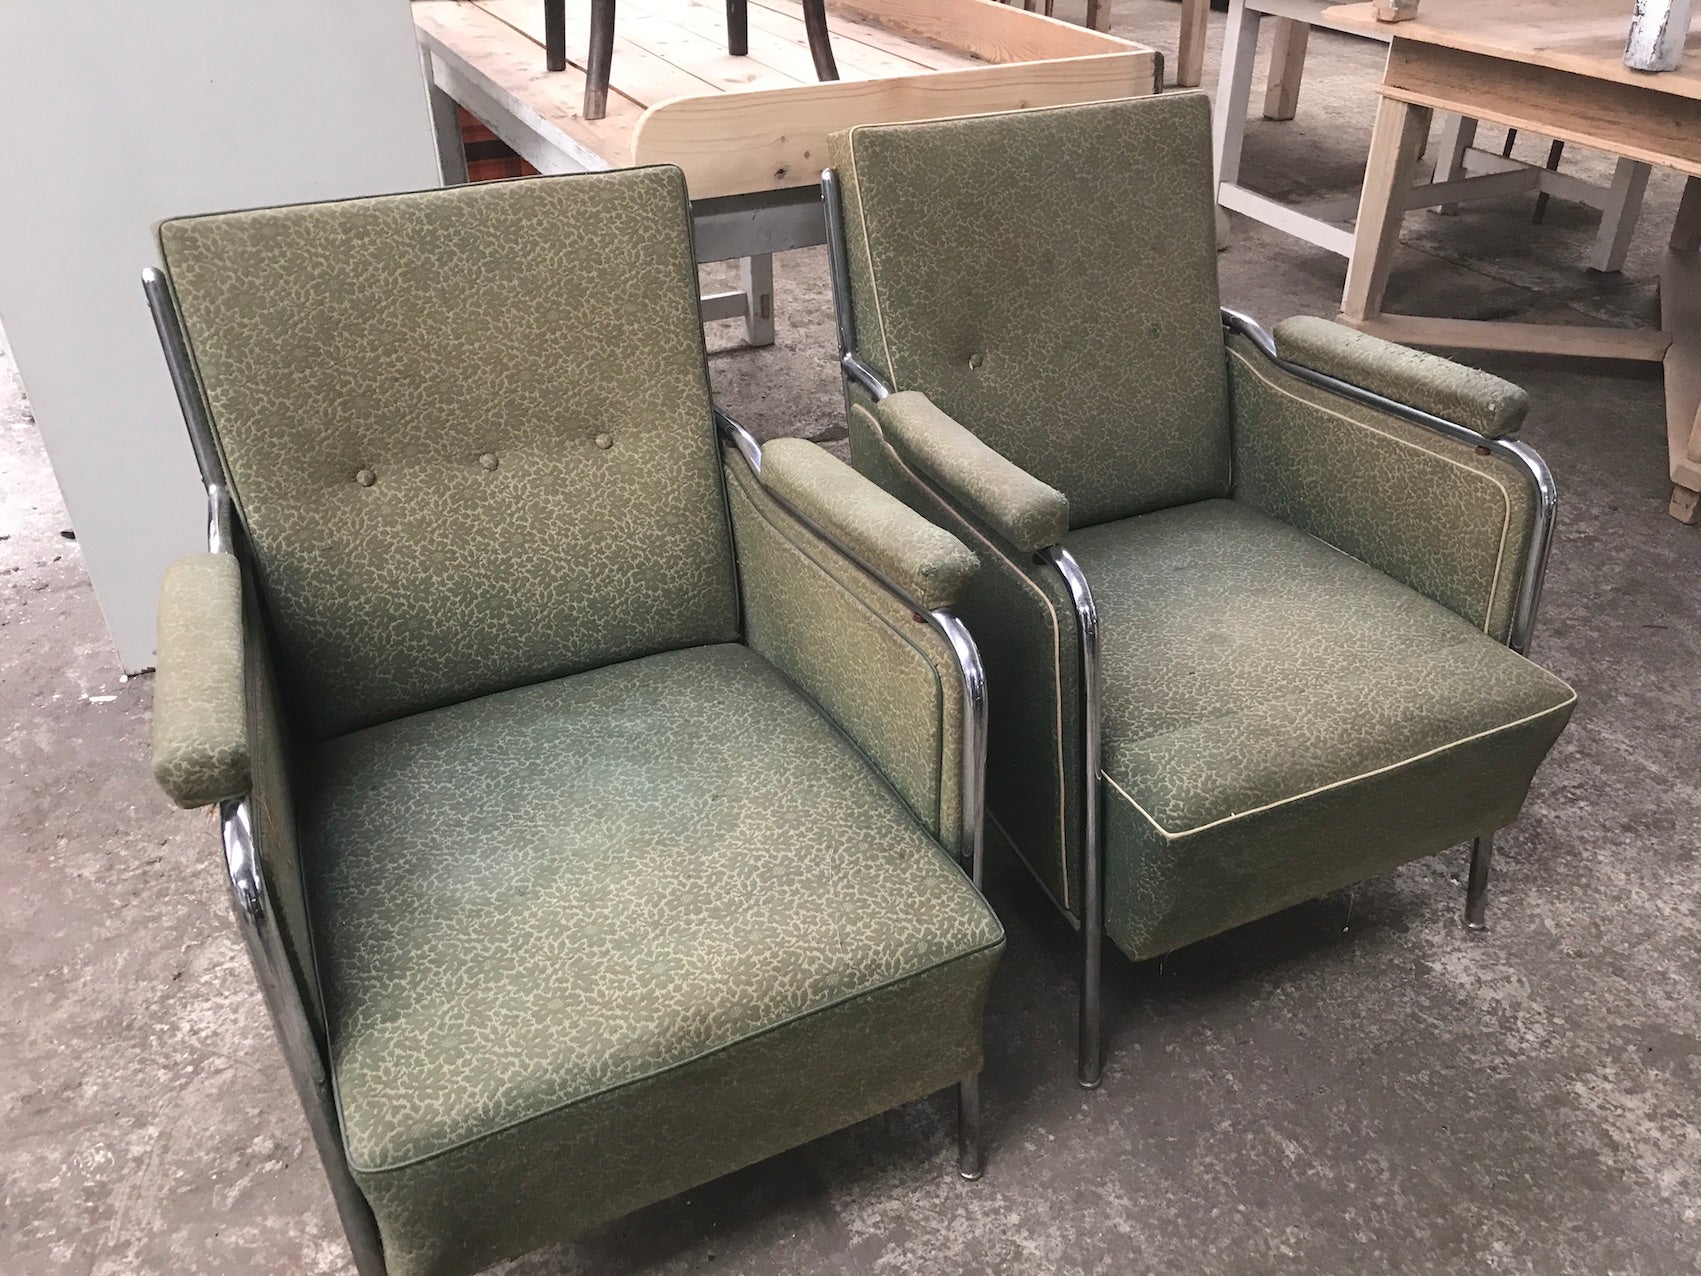 Vintage industrial Czech Halabala club arm chair set #2125 green